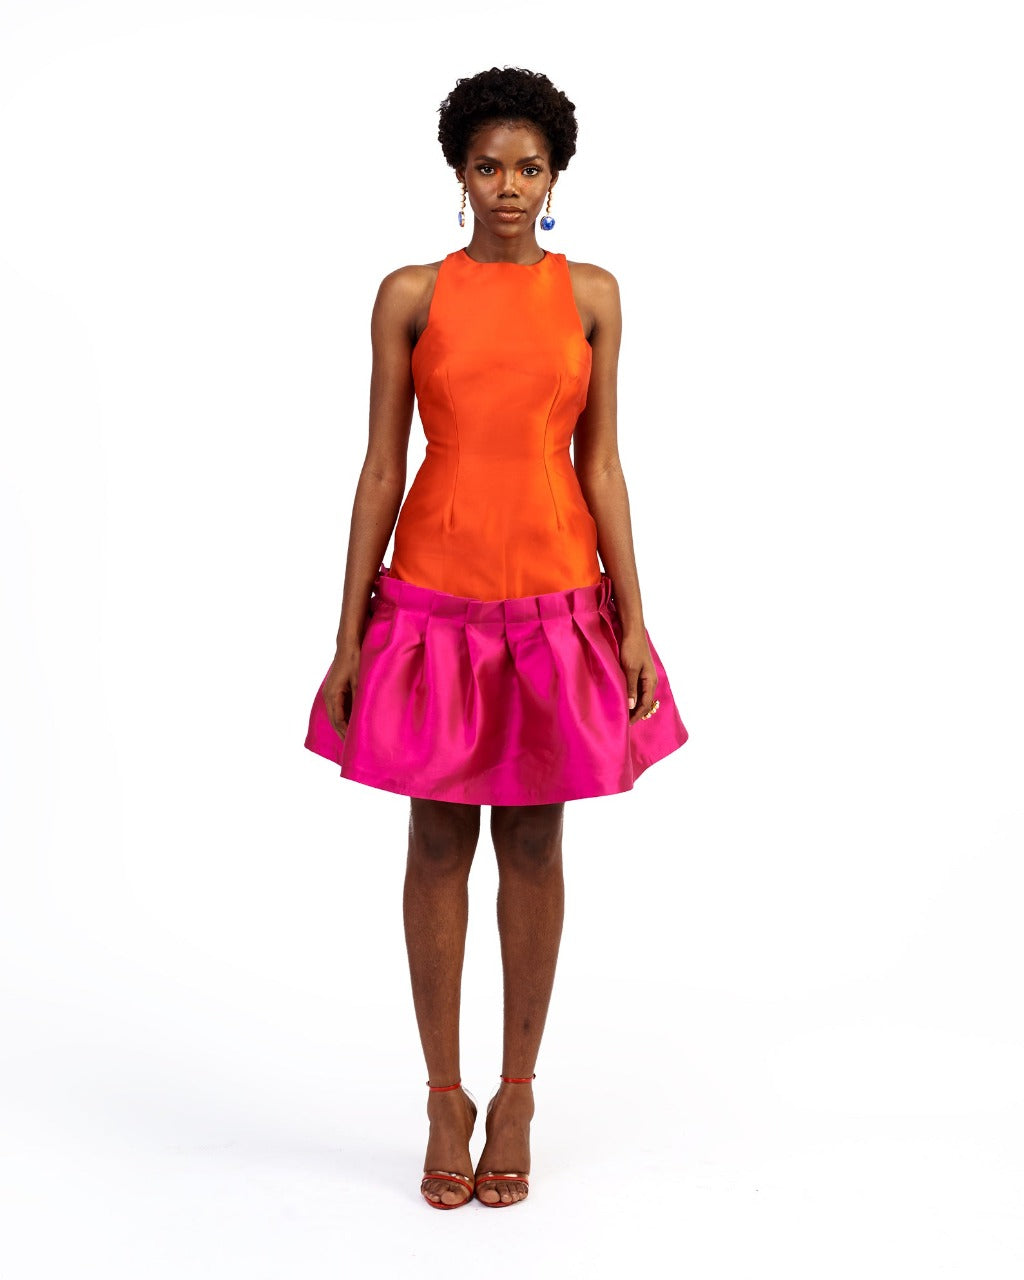 A model wearing an orange and magenta silk satin dress